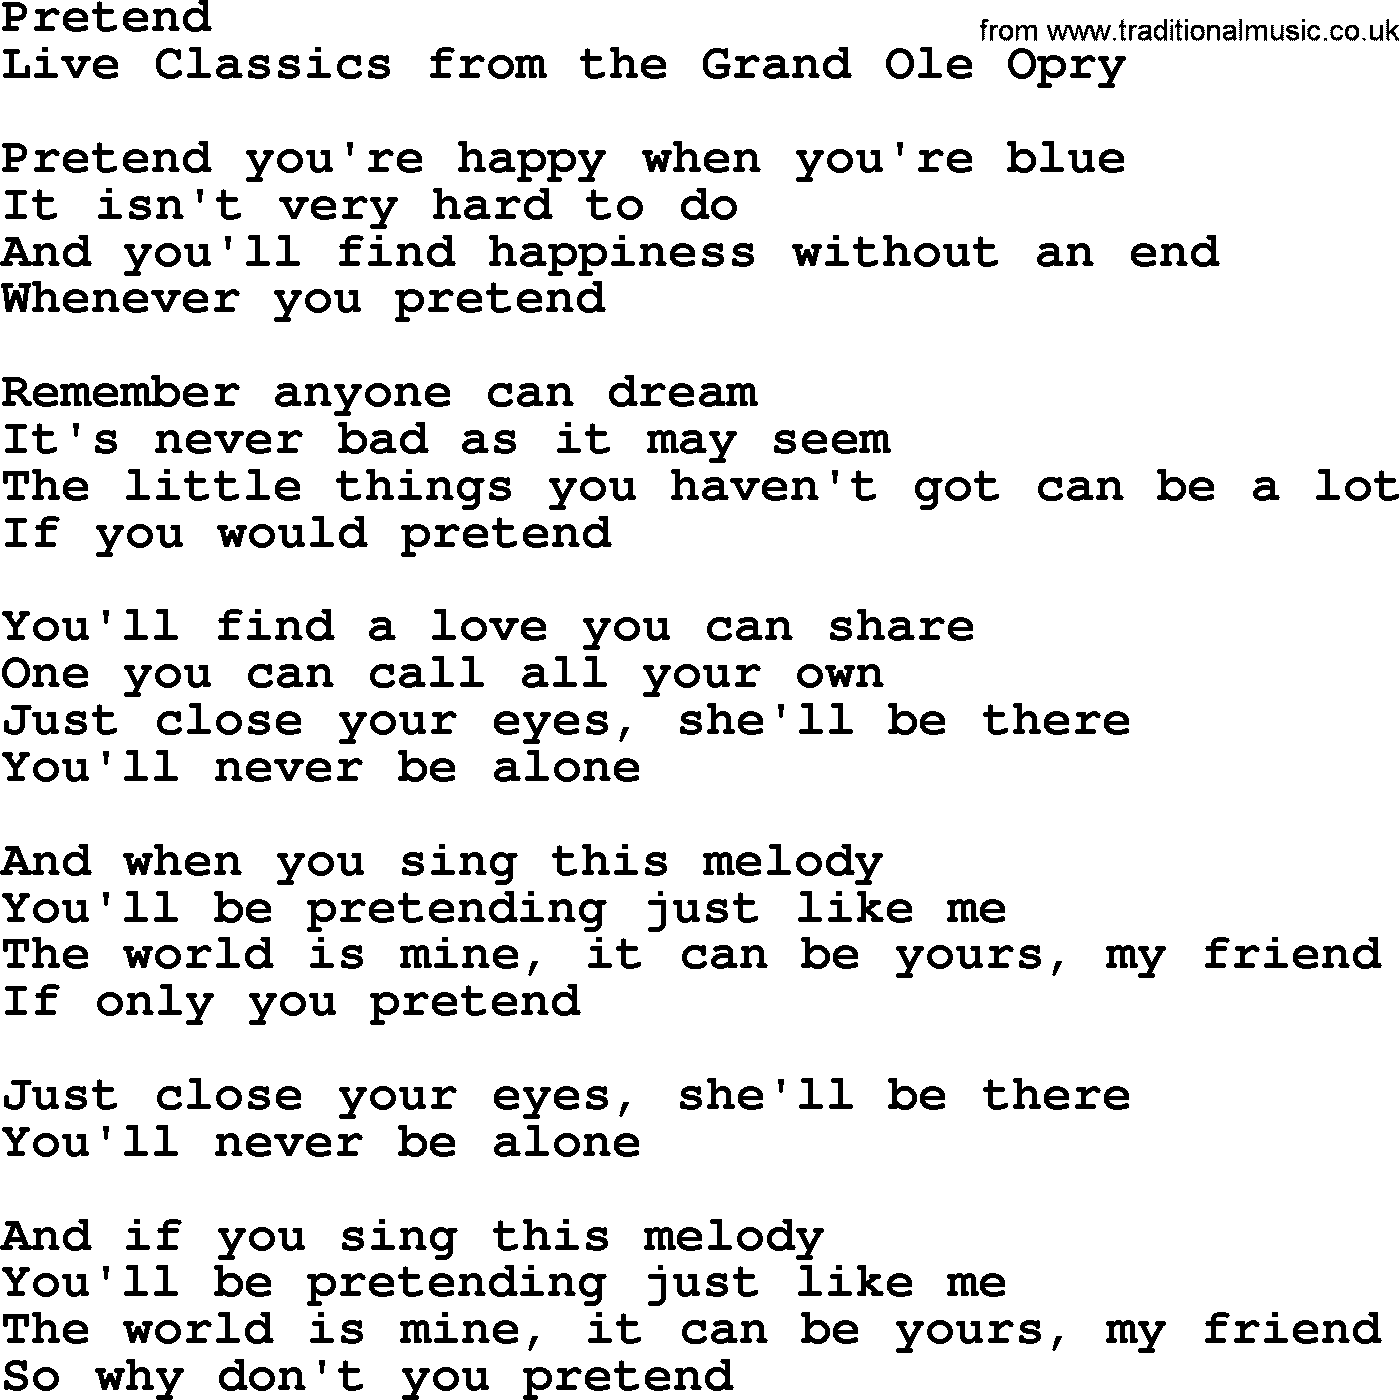 Marty Robbins song: Pretend, lyrics